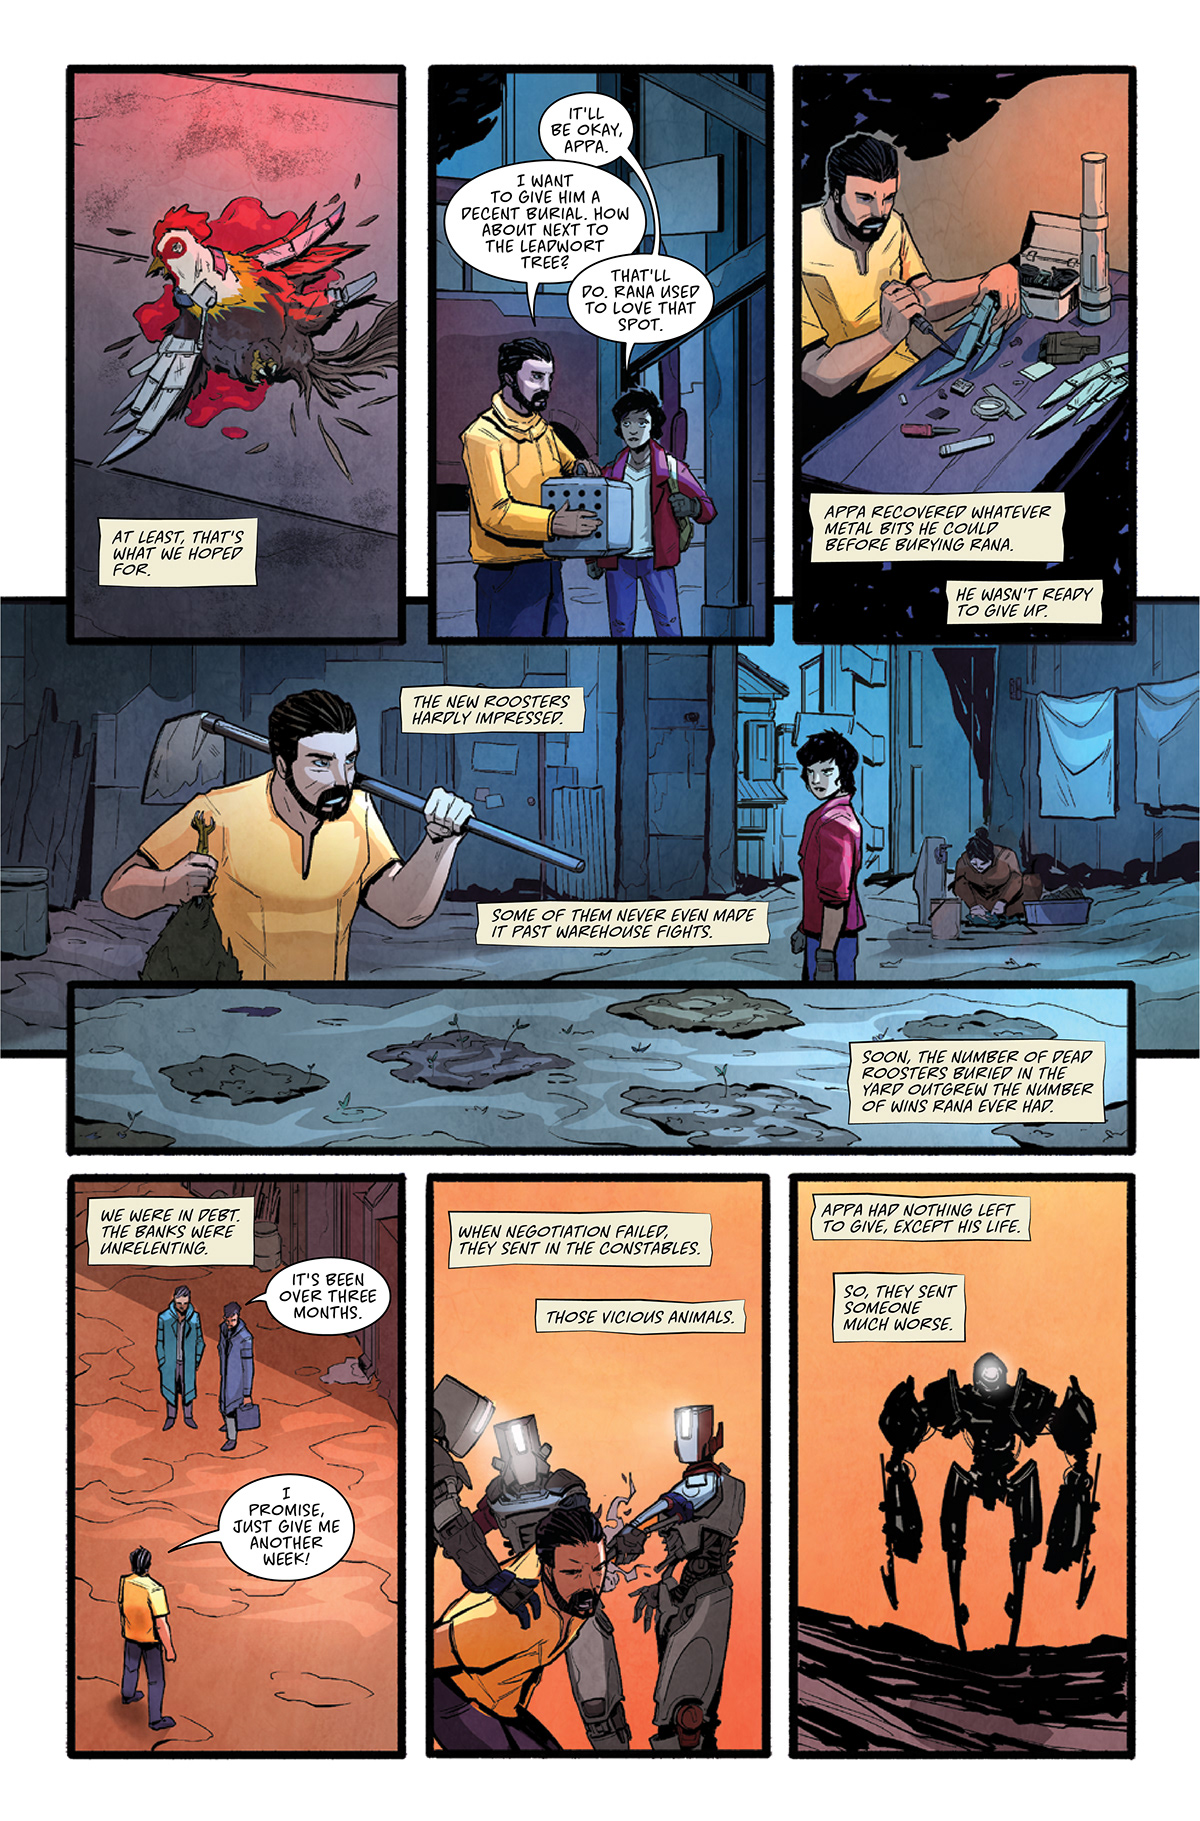 Rooster Sri lanka Sci Fi Cyberpunk comic Digital Comic web comic young adult Cover Art